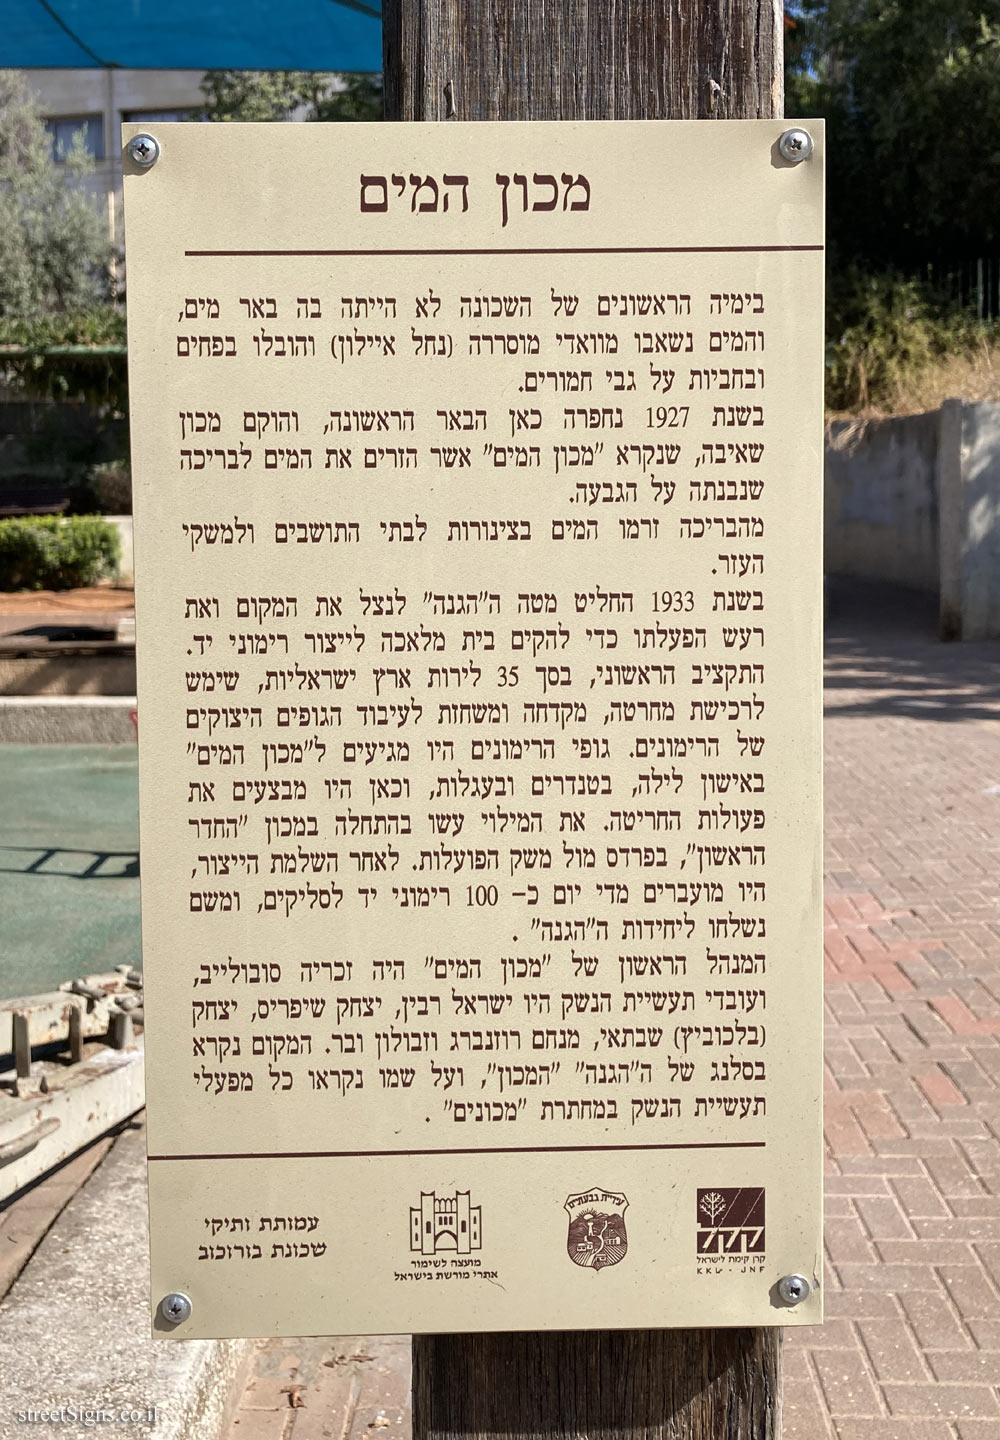 Givatayim - Rishonim route - The  Water Institute - HaShomer St 7, Giv’atayim, Israel